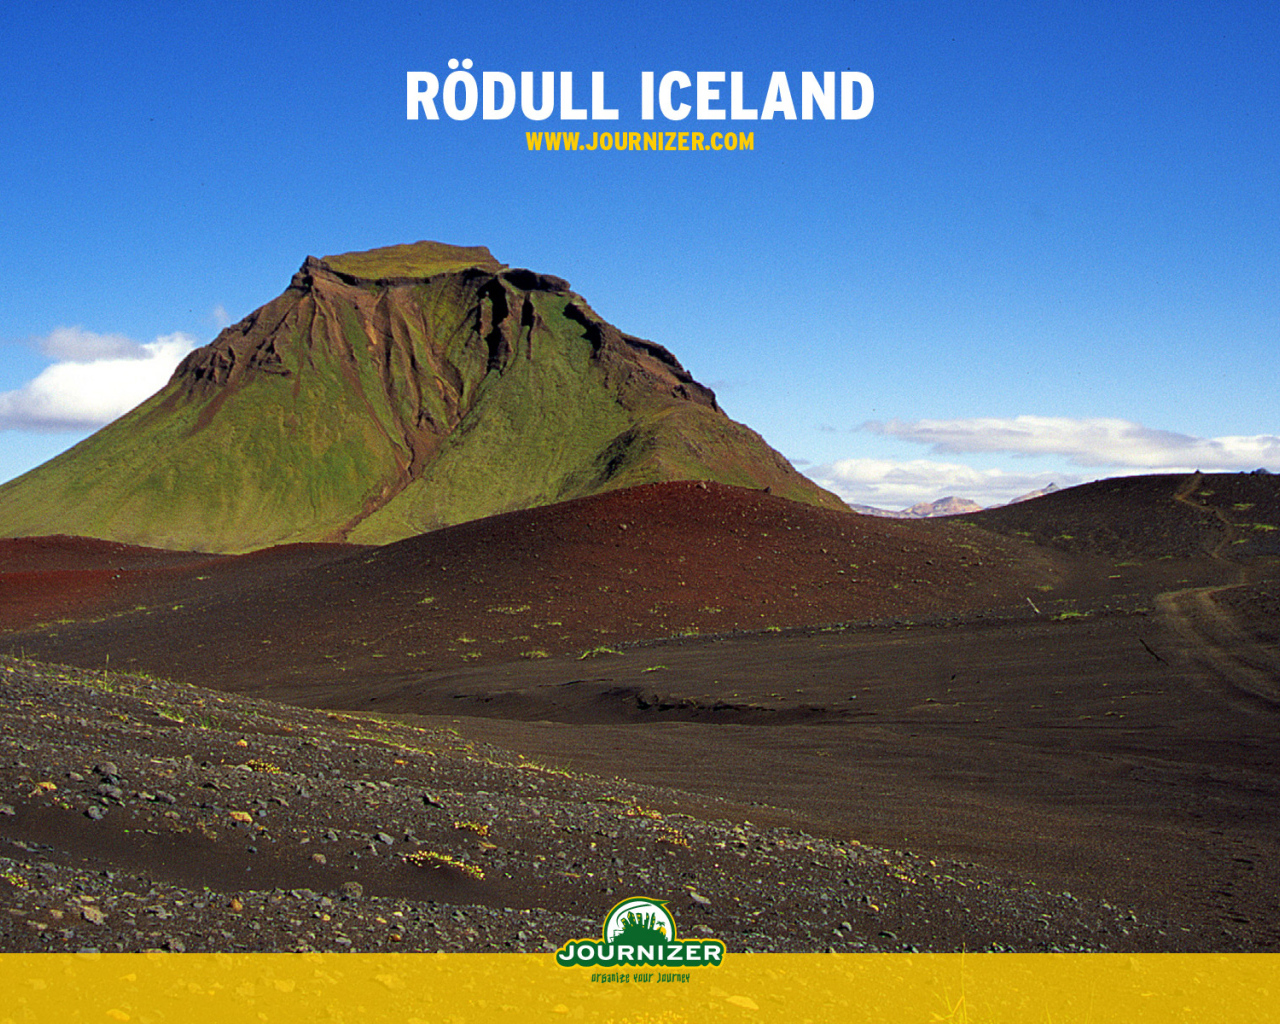 Rodull Iceland